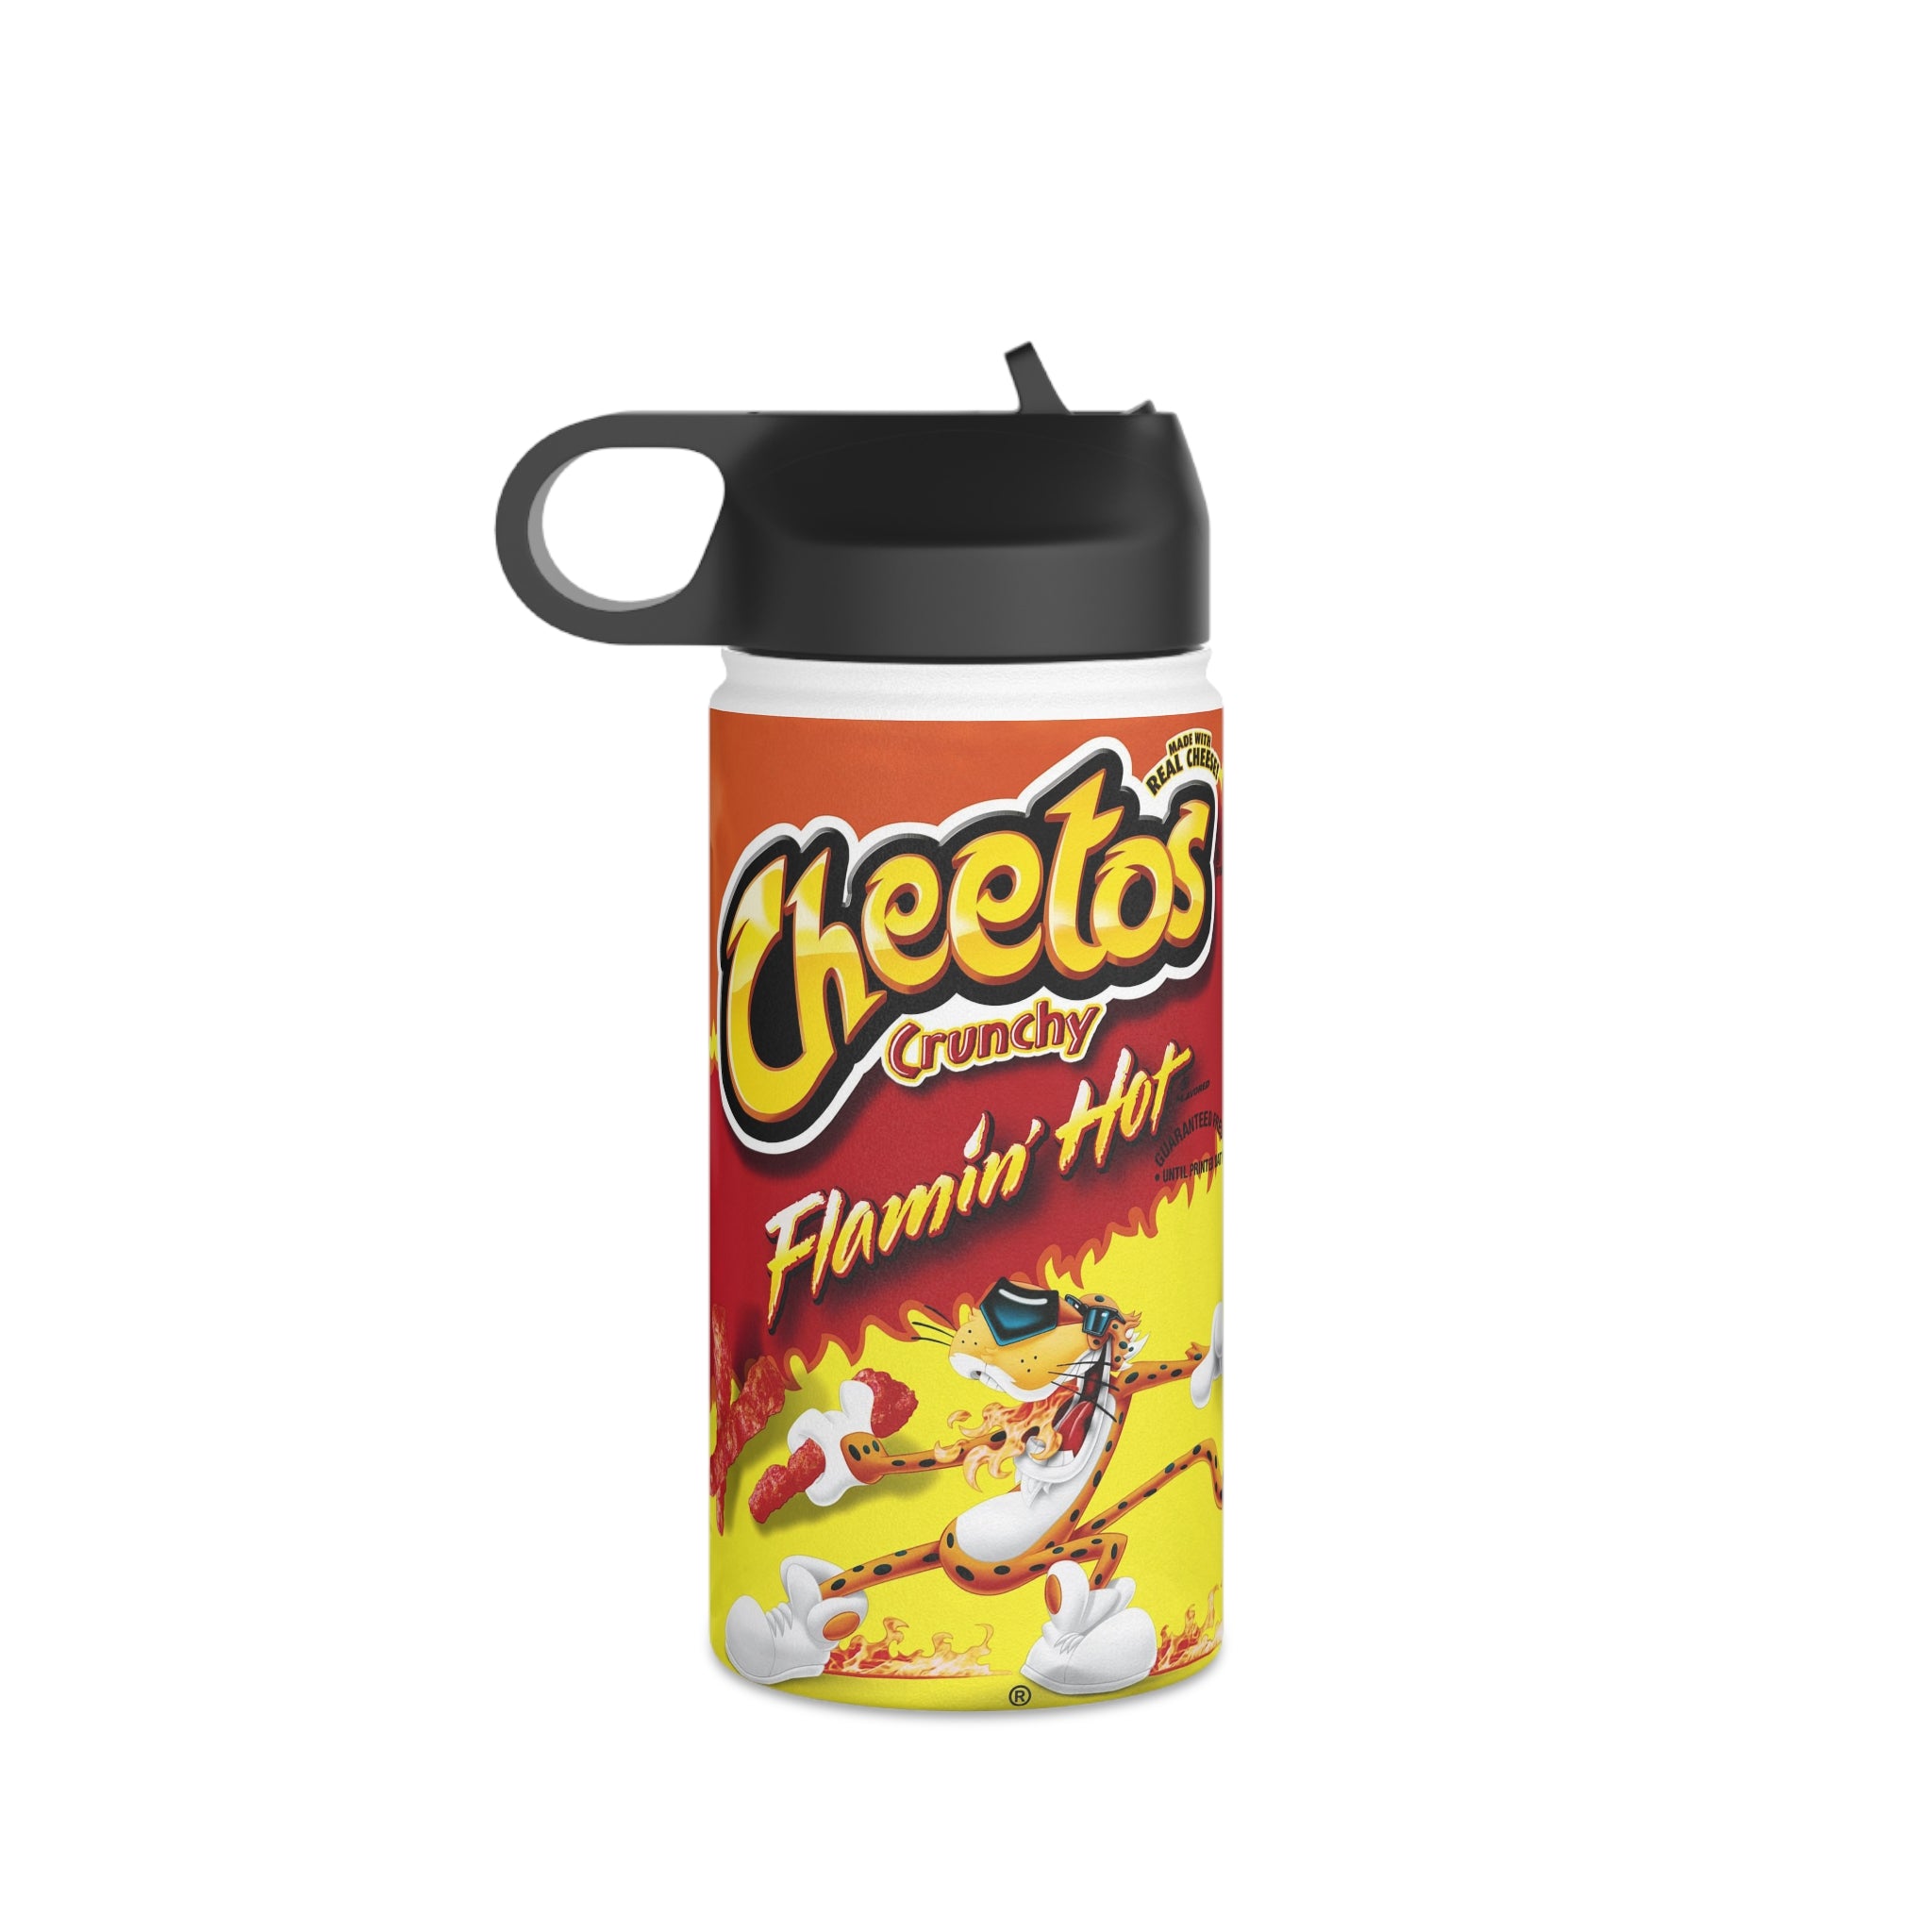 Cheetos Crunchy Flamin Hot Stainless Steel Water Bottle, Standard Lid